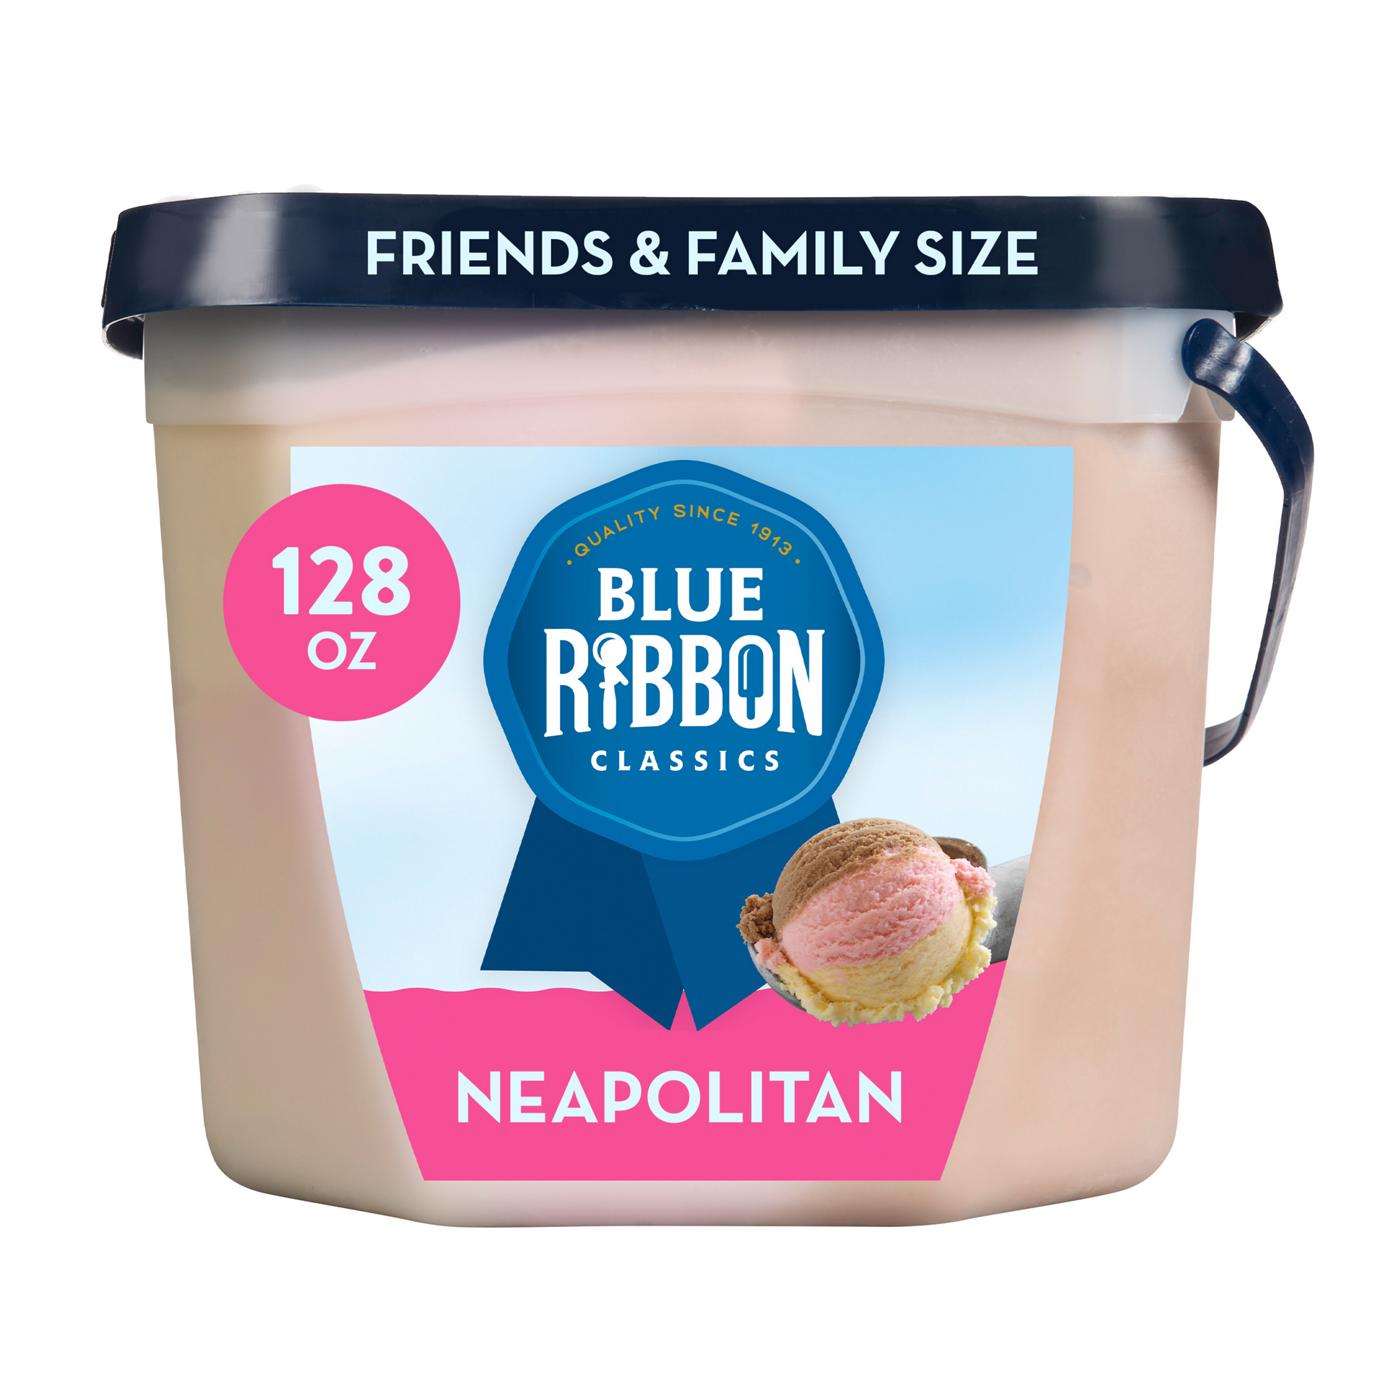 Blue Ribbon Neapolitan Ice Cream Family Size; image 1 of 2